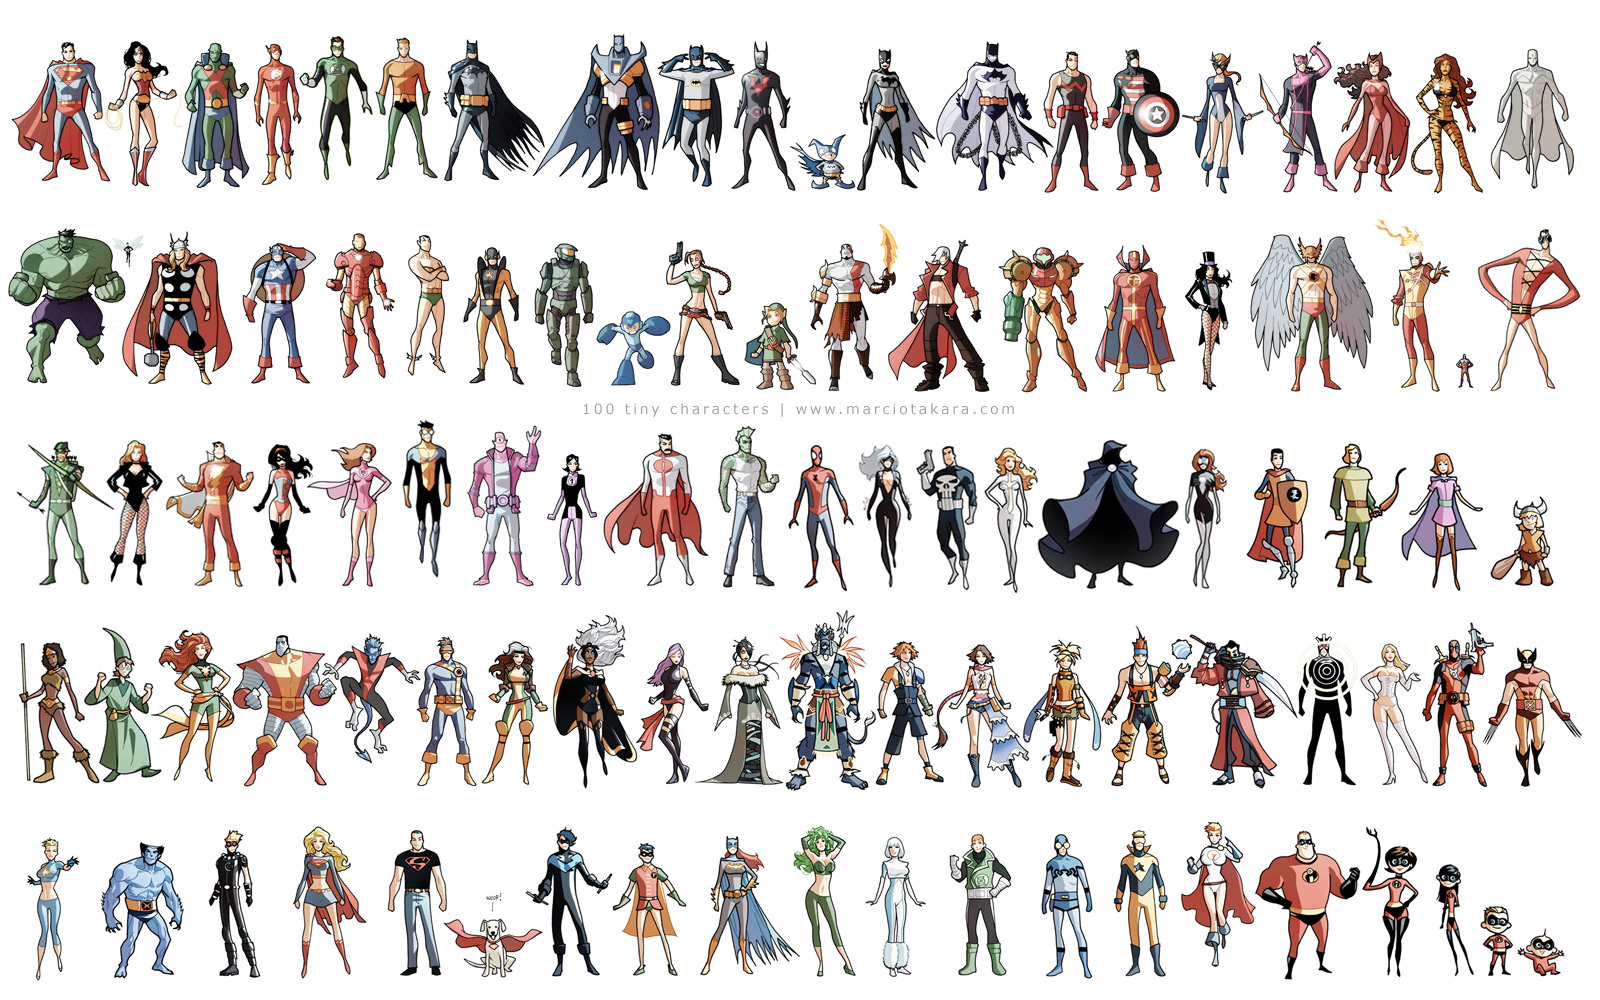 god of war, comics, collage, aquaman, atom (dc comics), atom eve, avengers, batgirl, batman, batwoman, beast (marvel comics), billy batson, black canary, black cat (marvel comics), captain america, carter hall, cloak (marvel comics), colossus, conner kent, dagger (marvel comics), dash parr, dazzler (marvel comics), dc comics, deadpool, devil may cry, dick grayson, dove (dc comics), dupli kate, elastigirl, emma frost, final fantasy, fire (dc comics), firestorm (dc comics), flash, green arrow, green lantern, hal jordan, havok (marvel comics), hawkeye, hawkman (dc comics), hulk, ice (dc comics), invincible (image comics), iron man, jack jack parr, janet van dyne, jean grey, justice league, krypto (dc comics), lara croft, link, mark grayson, martian manhunter, mega man, mr incredible, namor the sub mariner, nightcrawler (marvel comics), omni man, phoenix (marvel comics), plastic man, power girl, psylocke (marvel comics), punisher, robin (dc comics), rogue (marvel comics), samantha eve wilkins, scarlet witch, shazam (dc comics), spider man, storm (marvel comics), superboy, supergirl, superman, thor, tigra (marvel comics), tomb raider, violet parr, wasp (marvel comics), wolverine, wonder woman, x men, zatanna